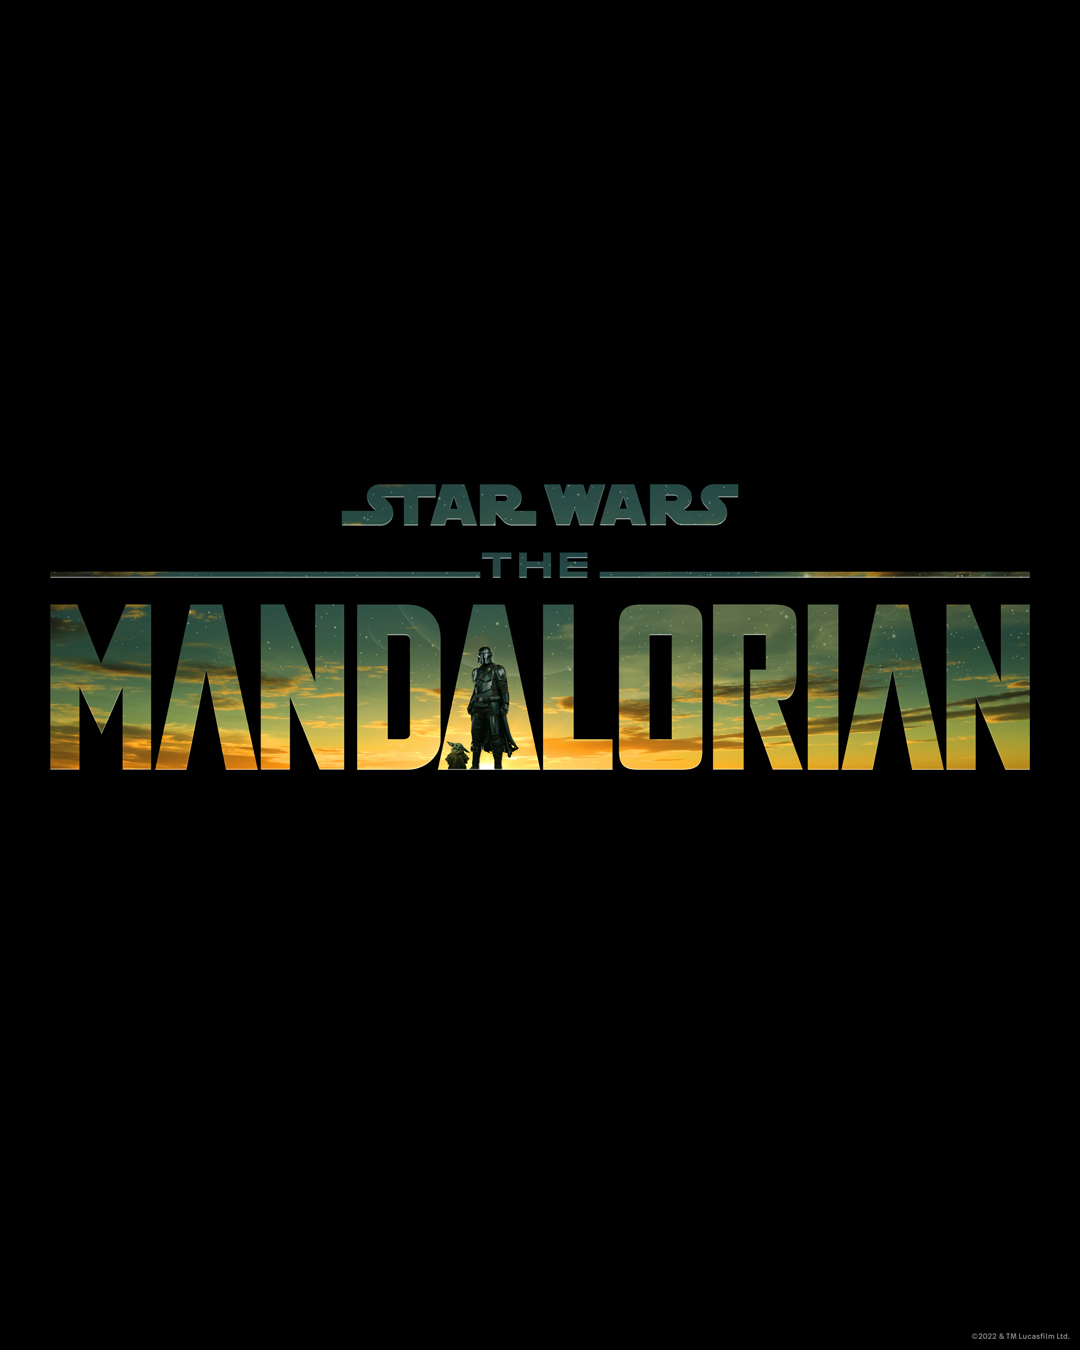 The mandalorian season 3 teaser poster